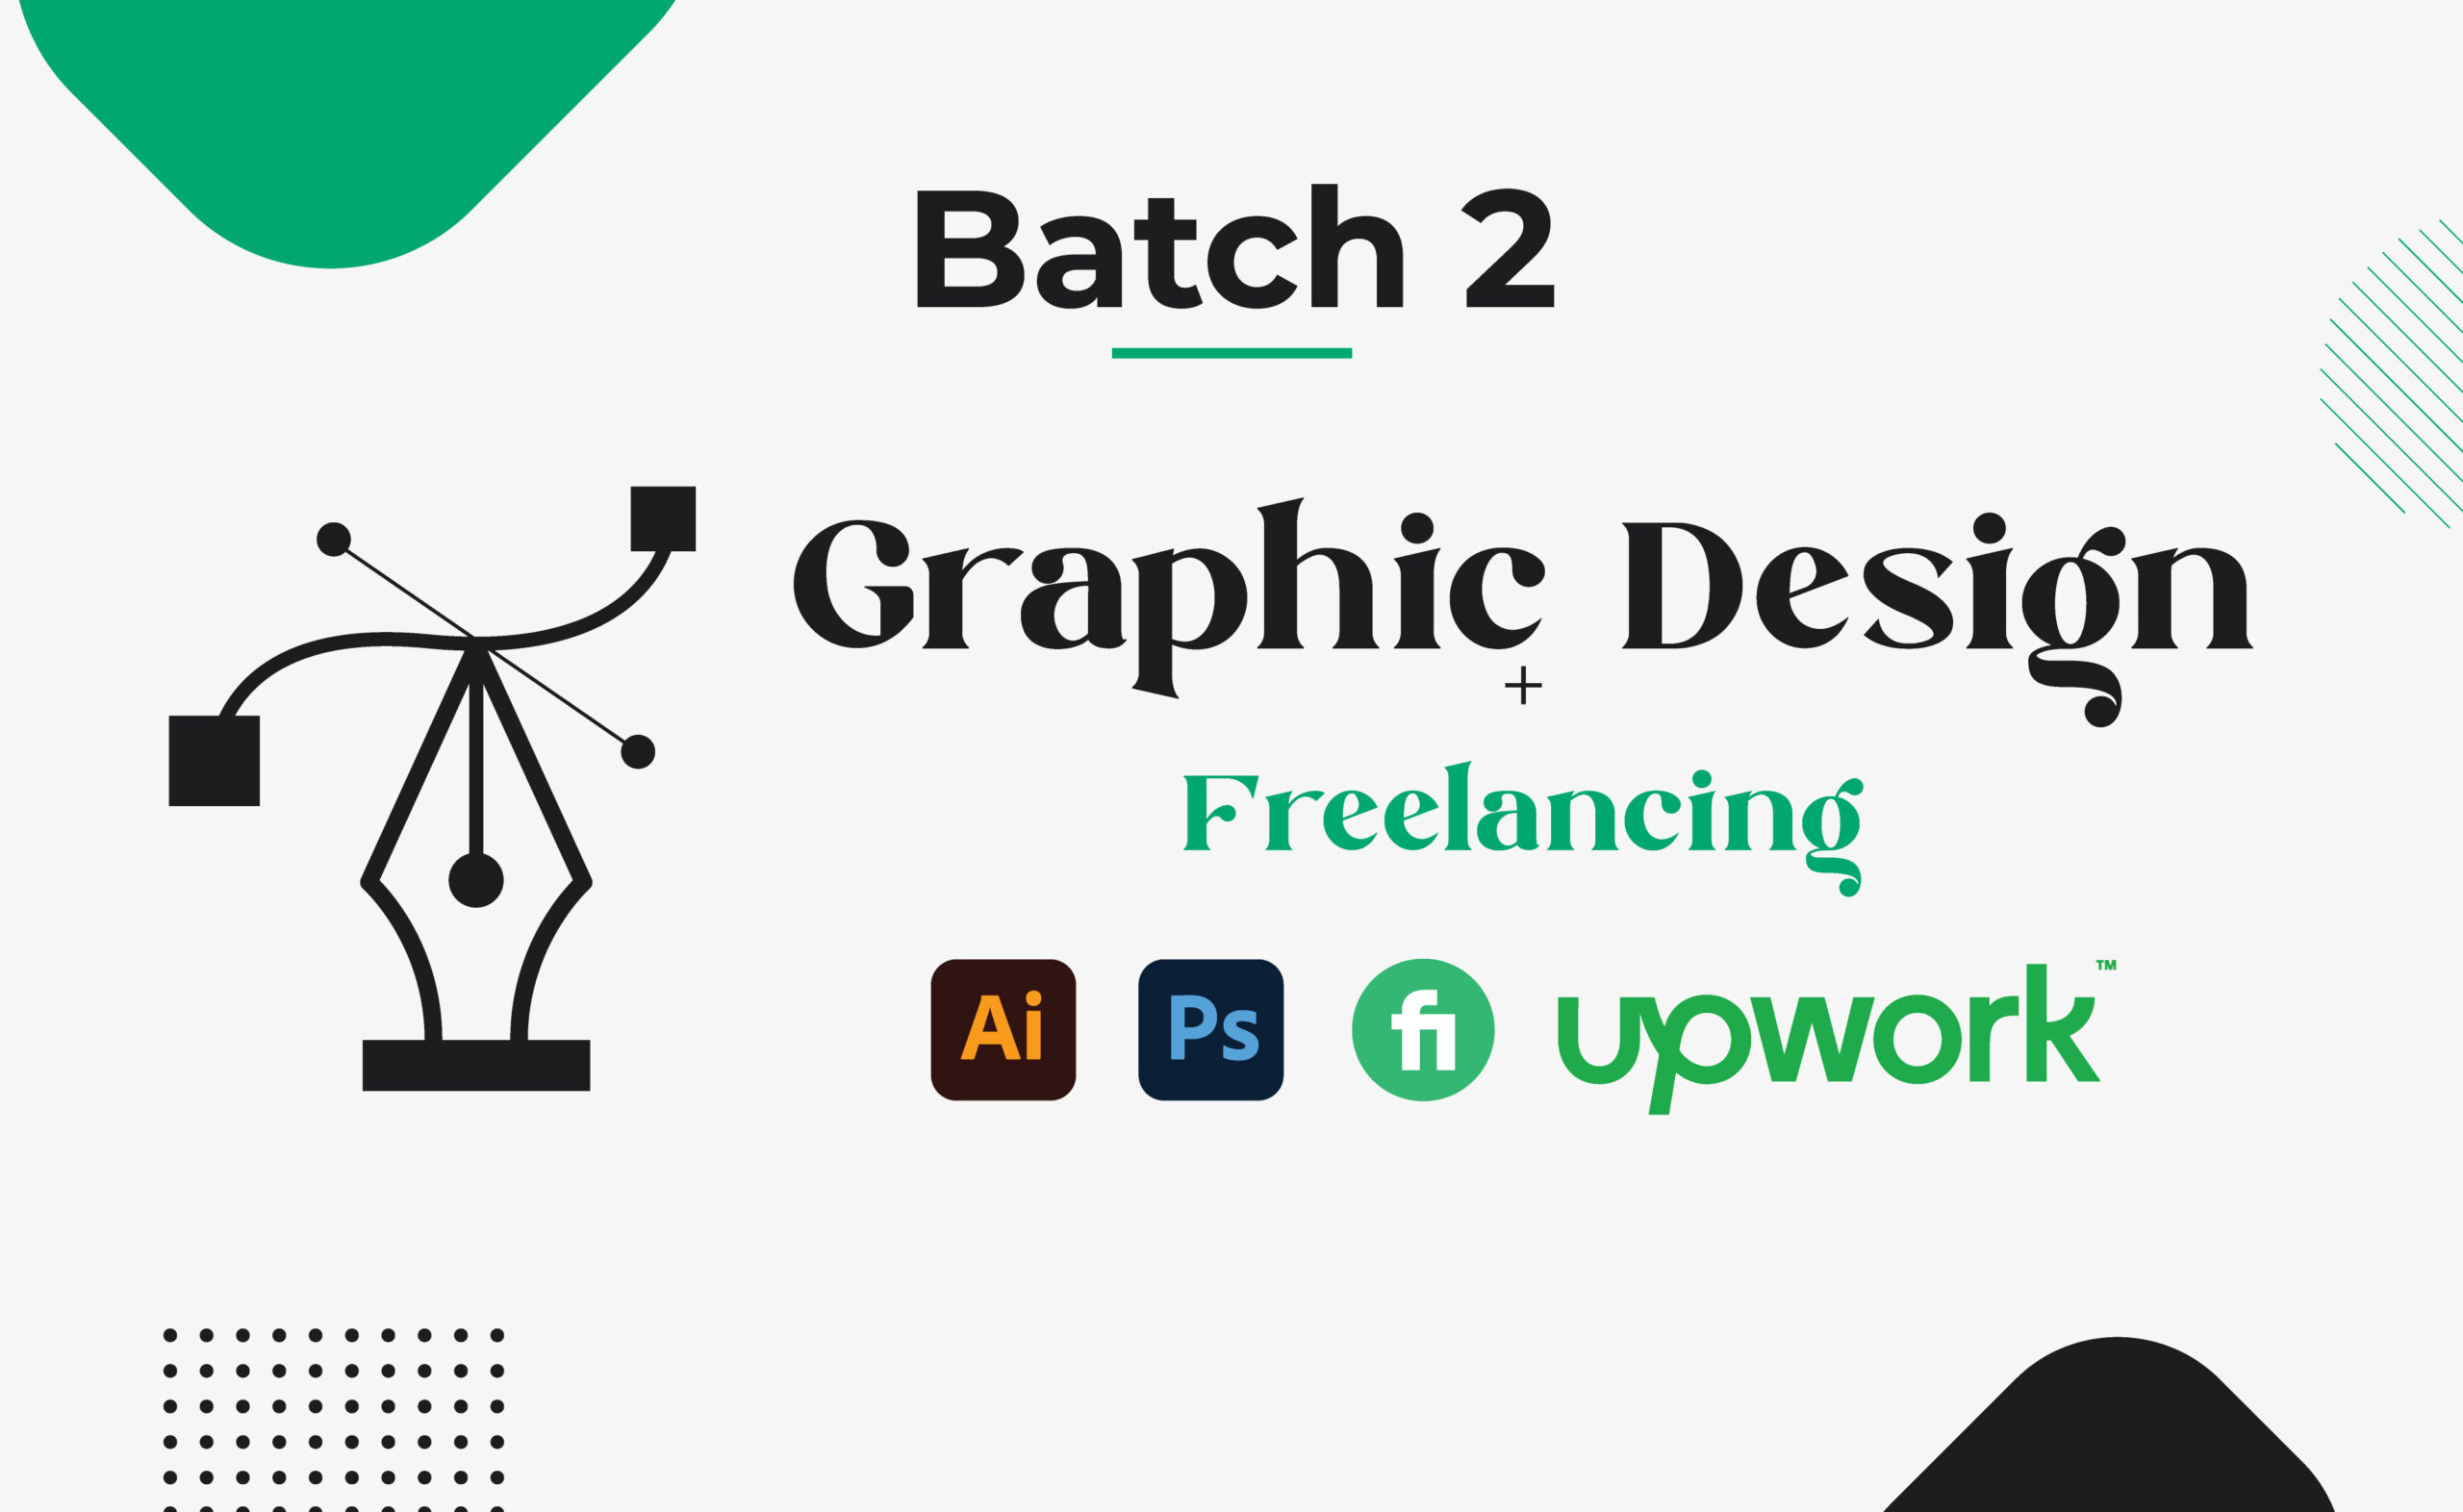 Batch 2: Graphic Design + Freelancing